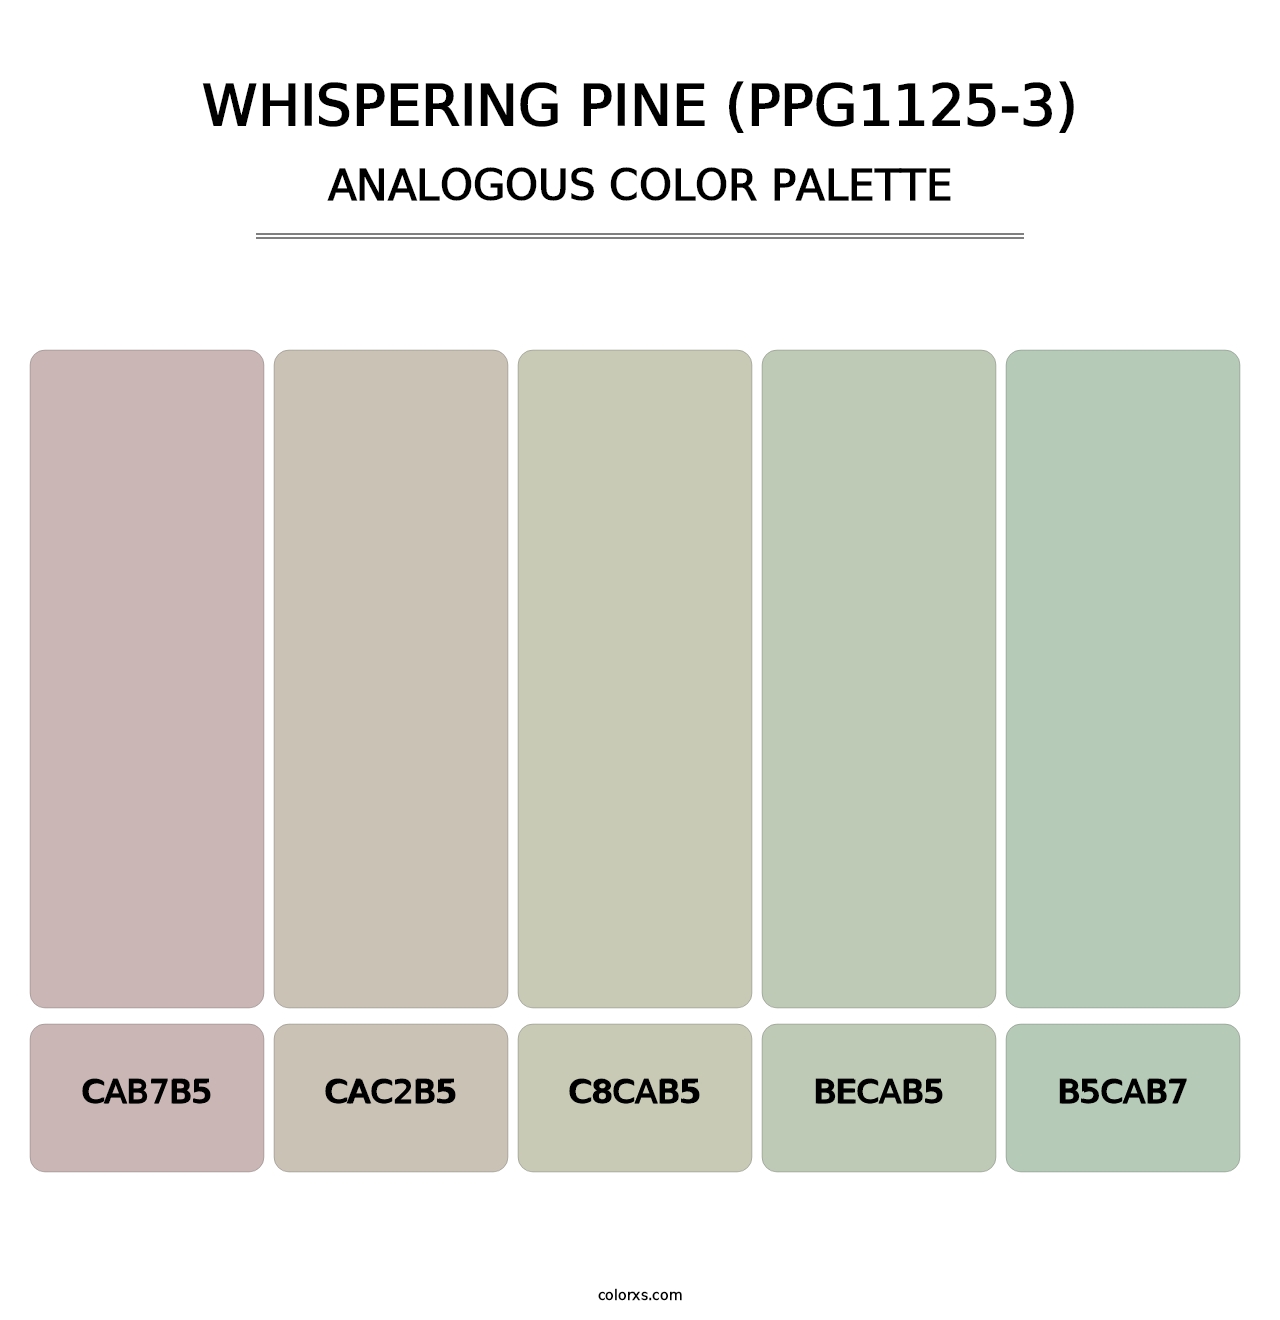 Whispering Pine (PPG1125-3) - Analogous Color Palette